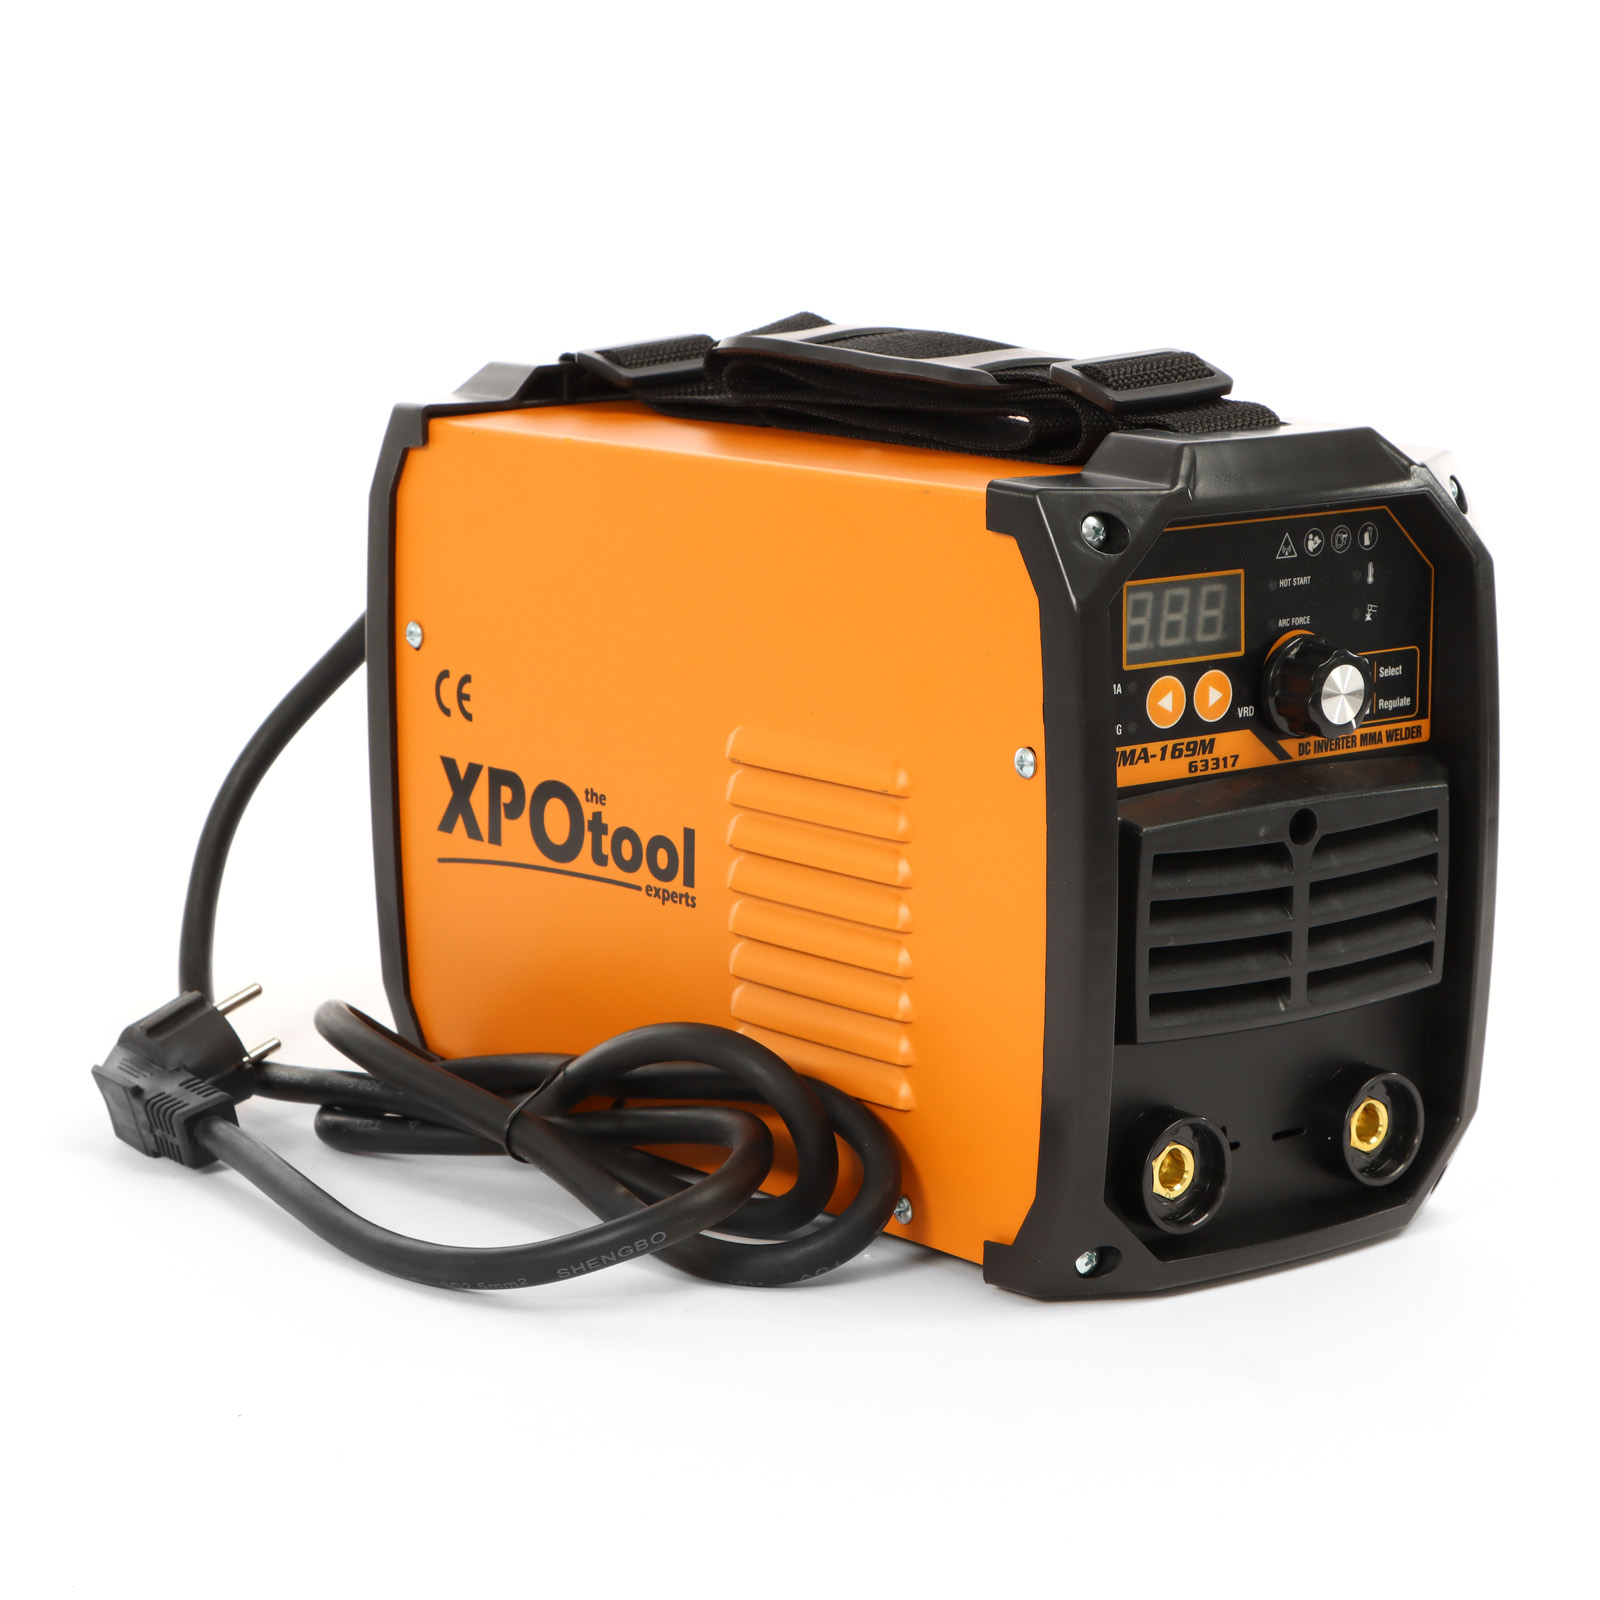 XPOtool Poste Souder portatif Électrodes MMA 20-120A IGBT Accessoires